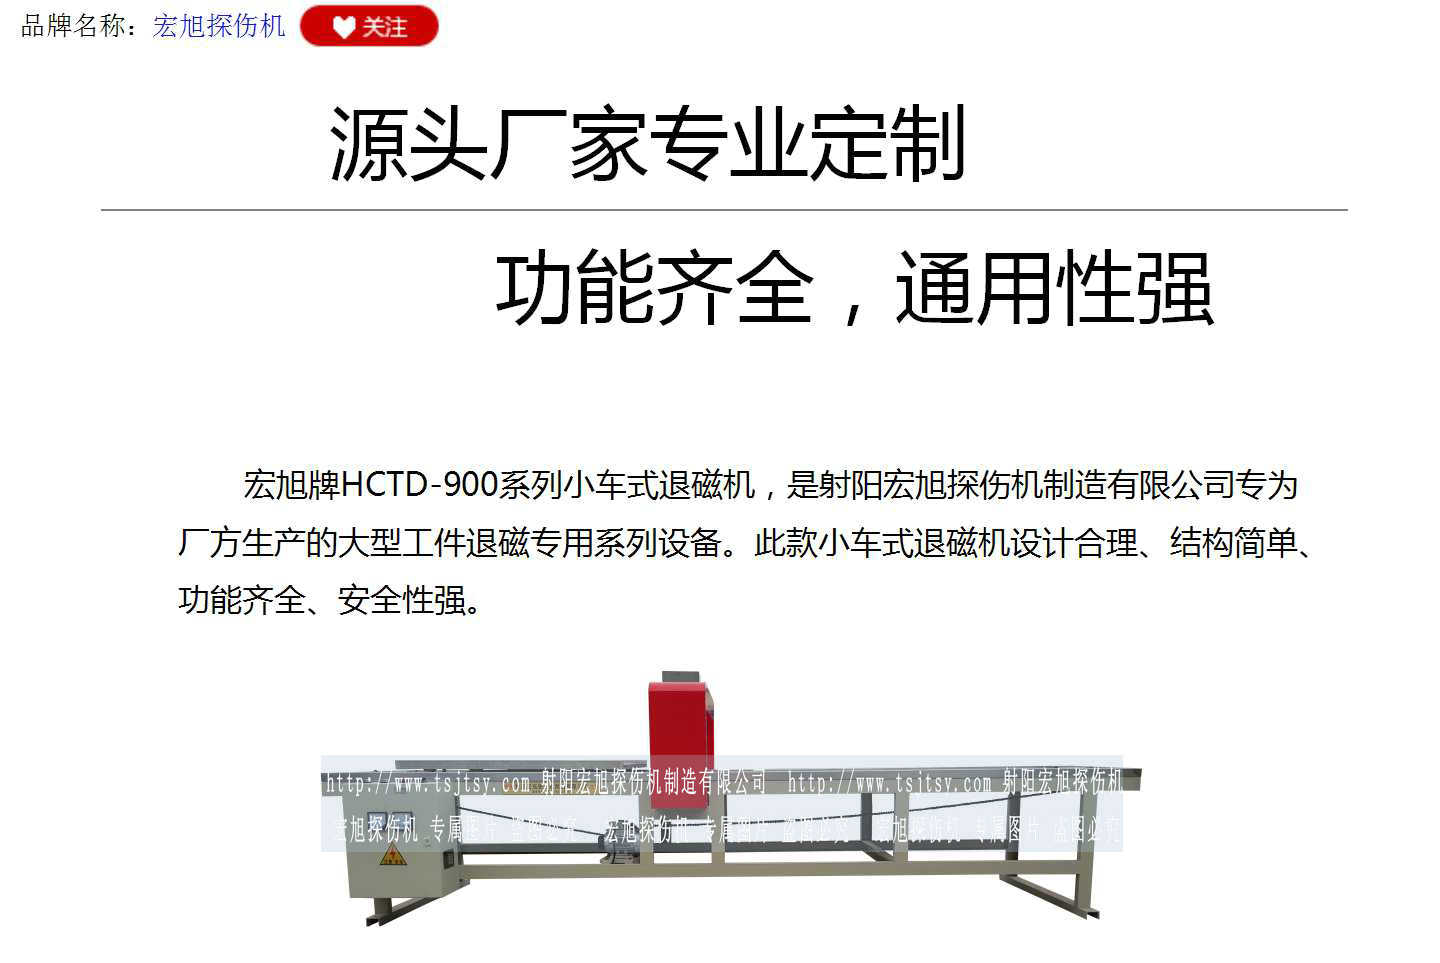 HCTD-900退磁机